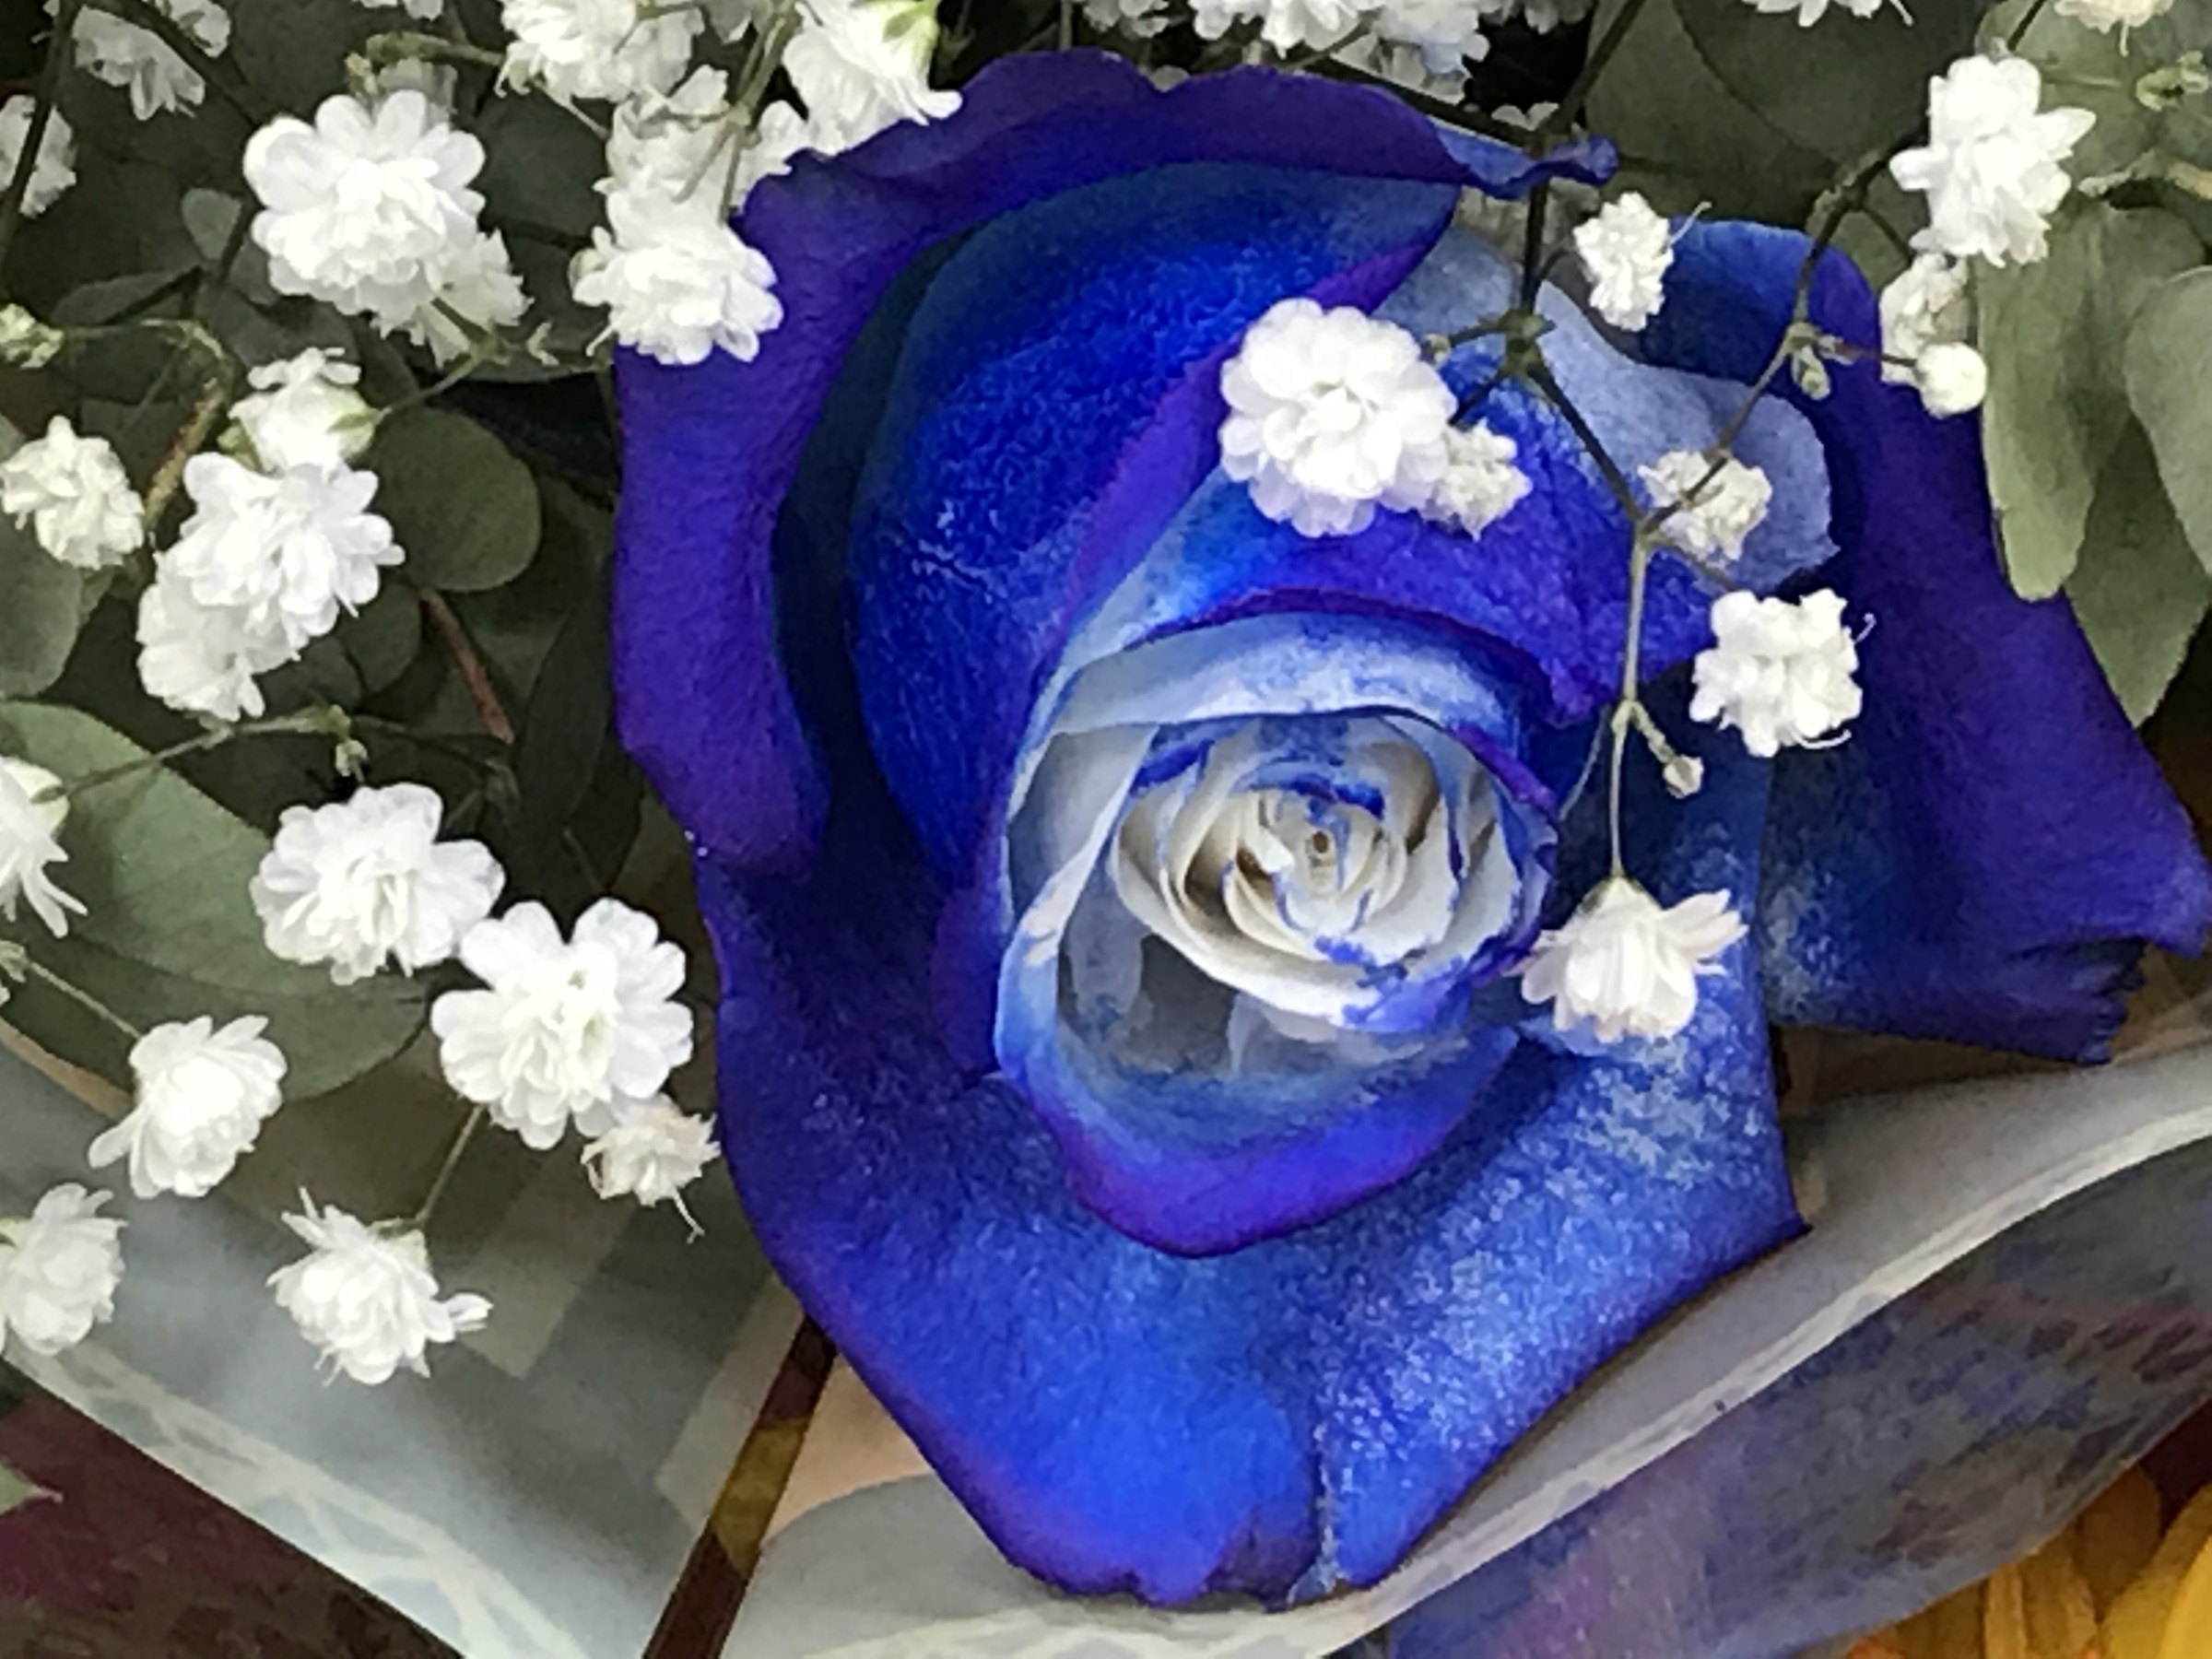 Real blue rose...